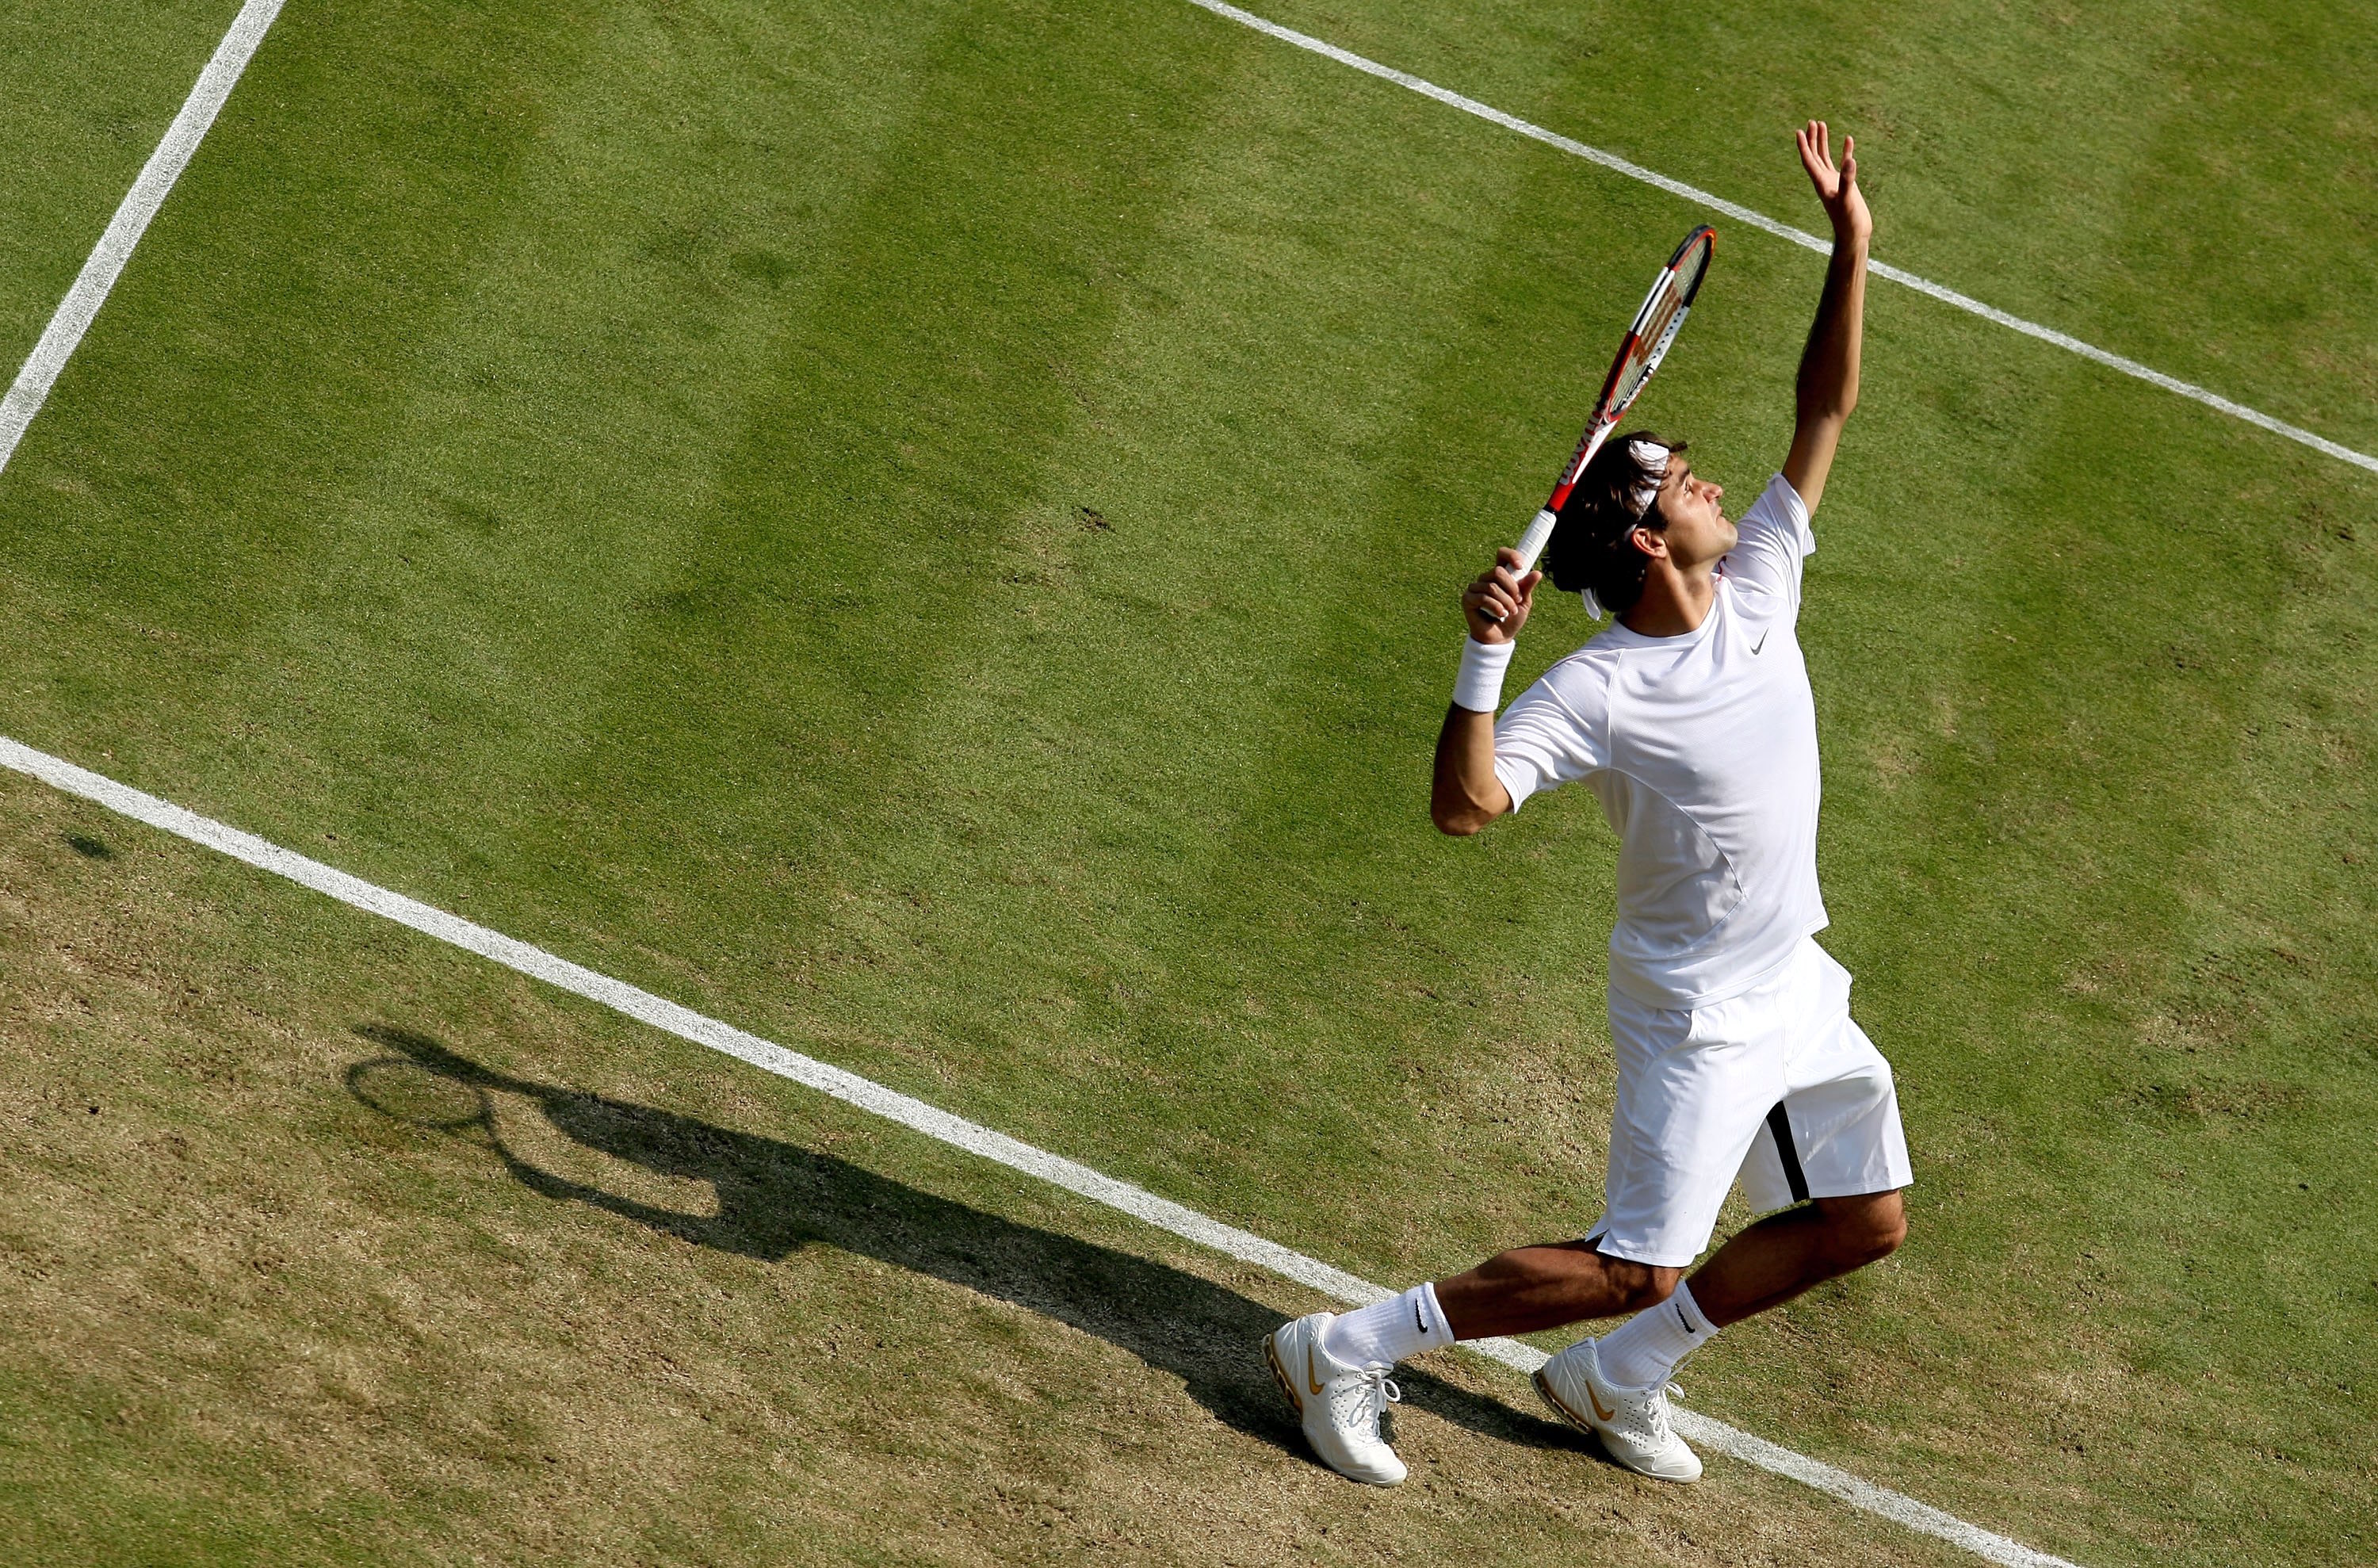 Roger Federer records that may never be broken The 65-match grass-court winning streak